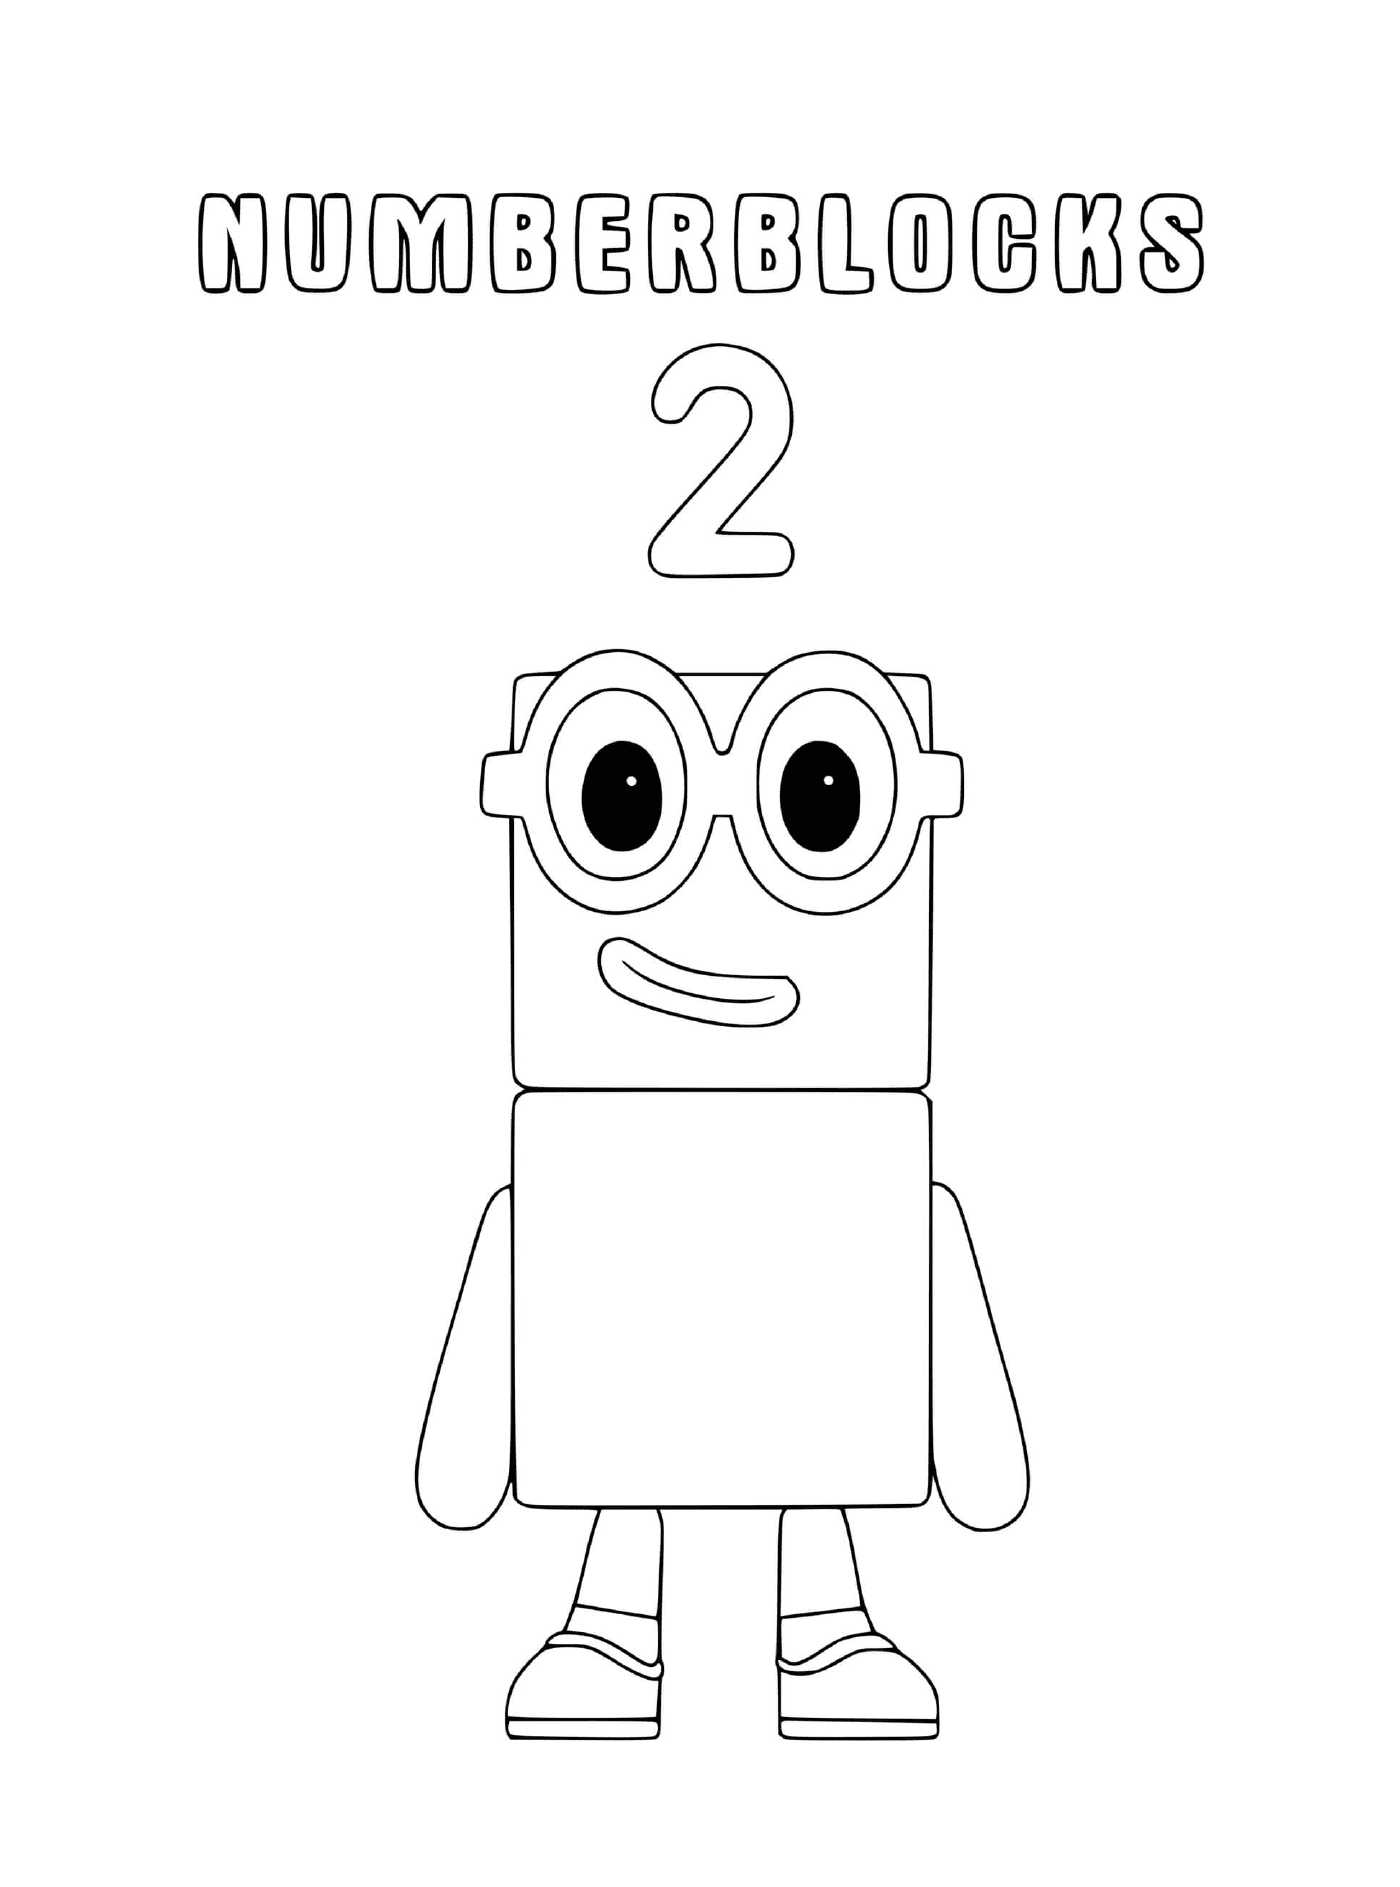  Numberblocks number 2, a futuristic robot 